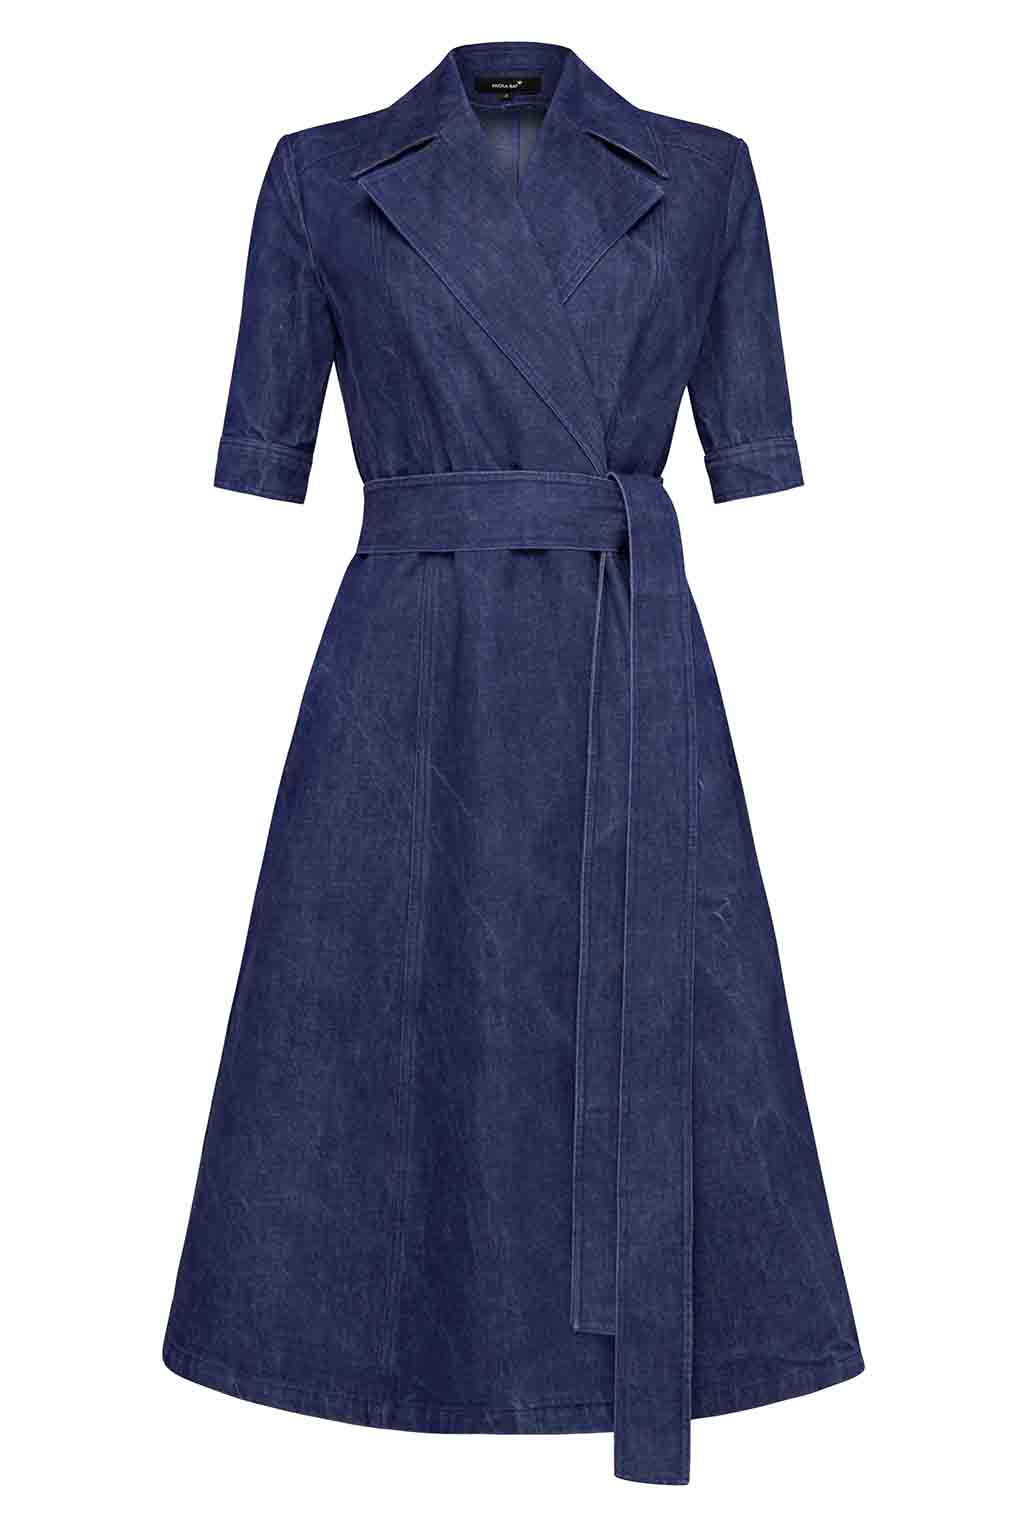 Платье женское PAOLA RAY PR120-3082 синее XS